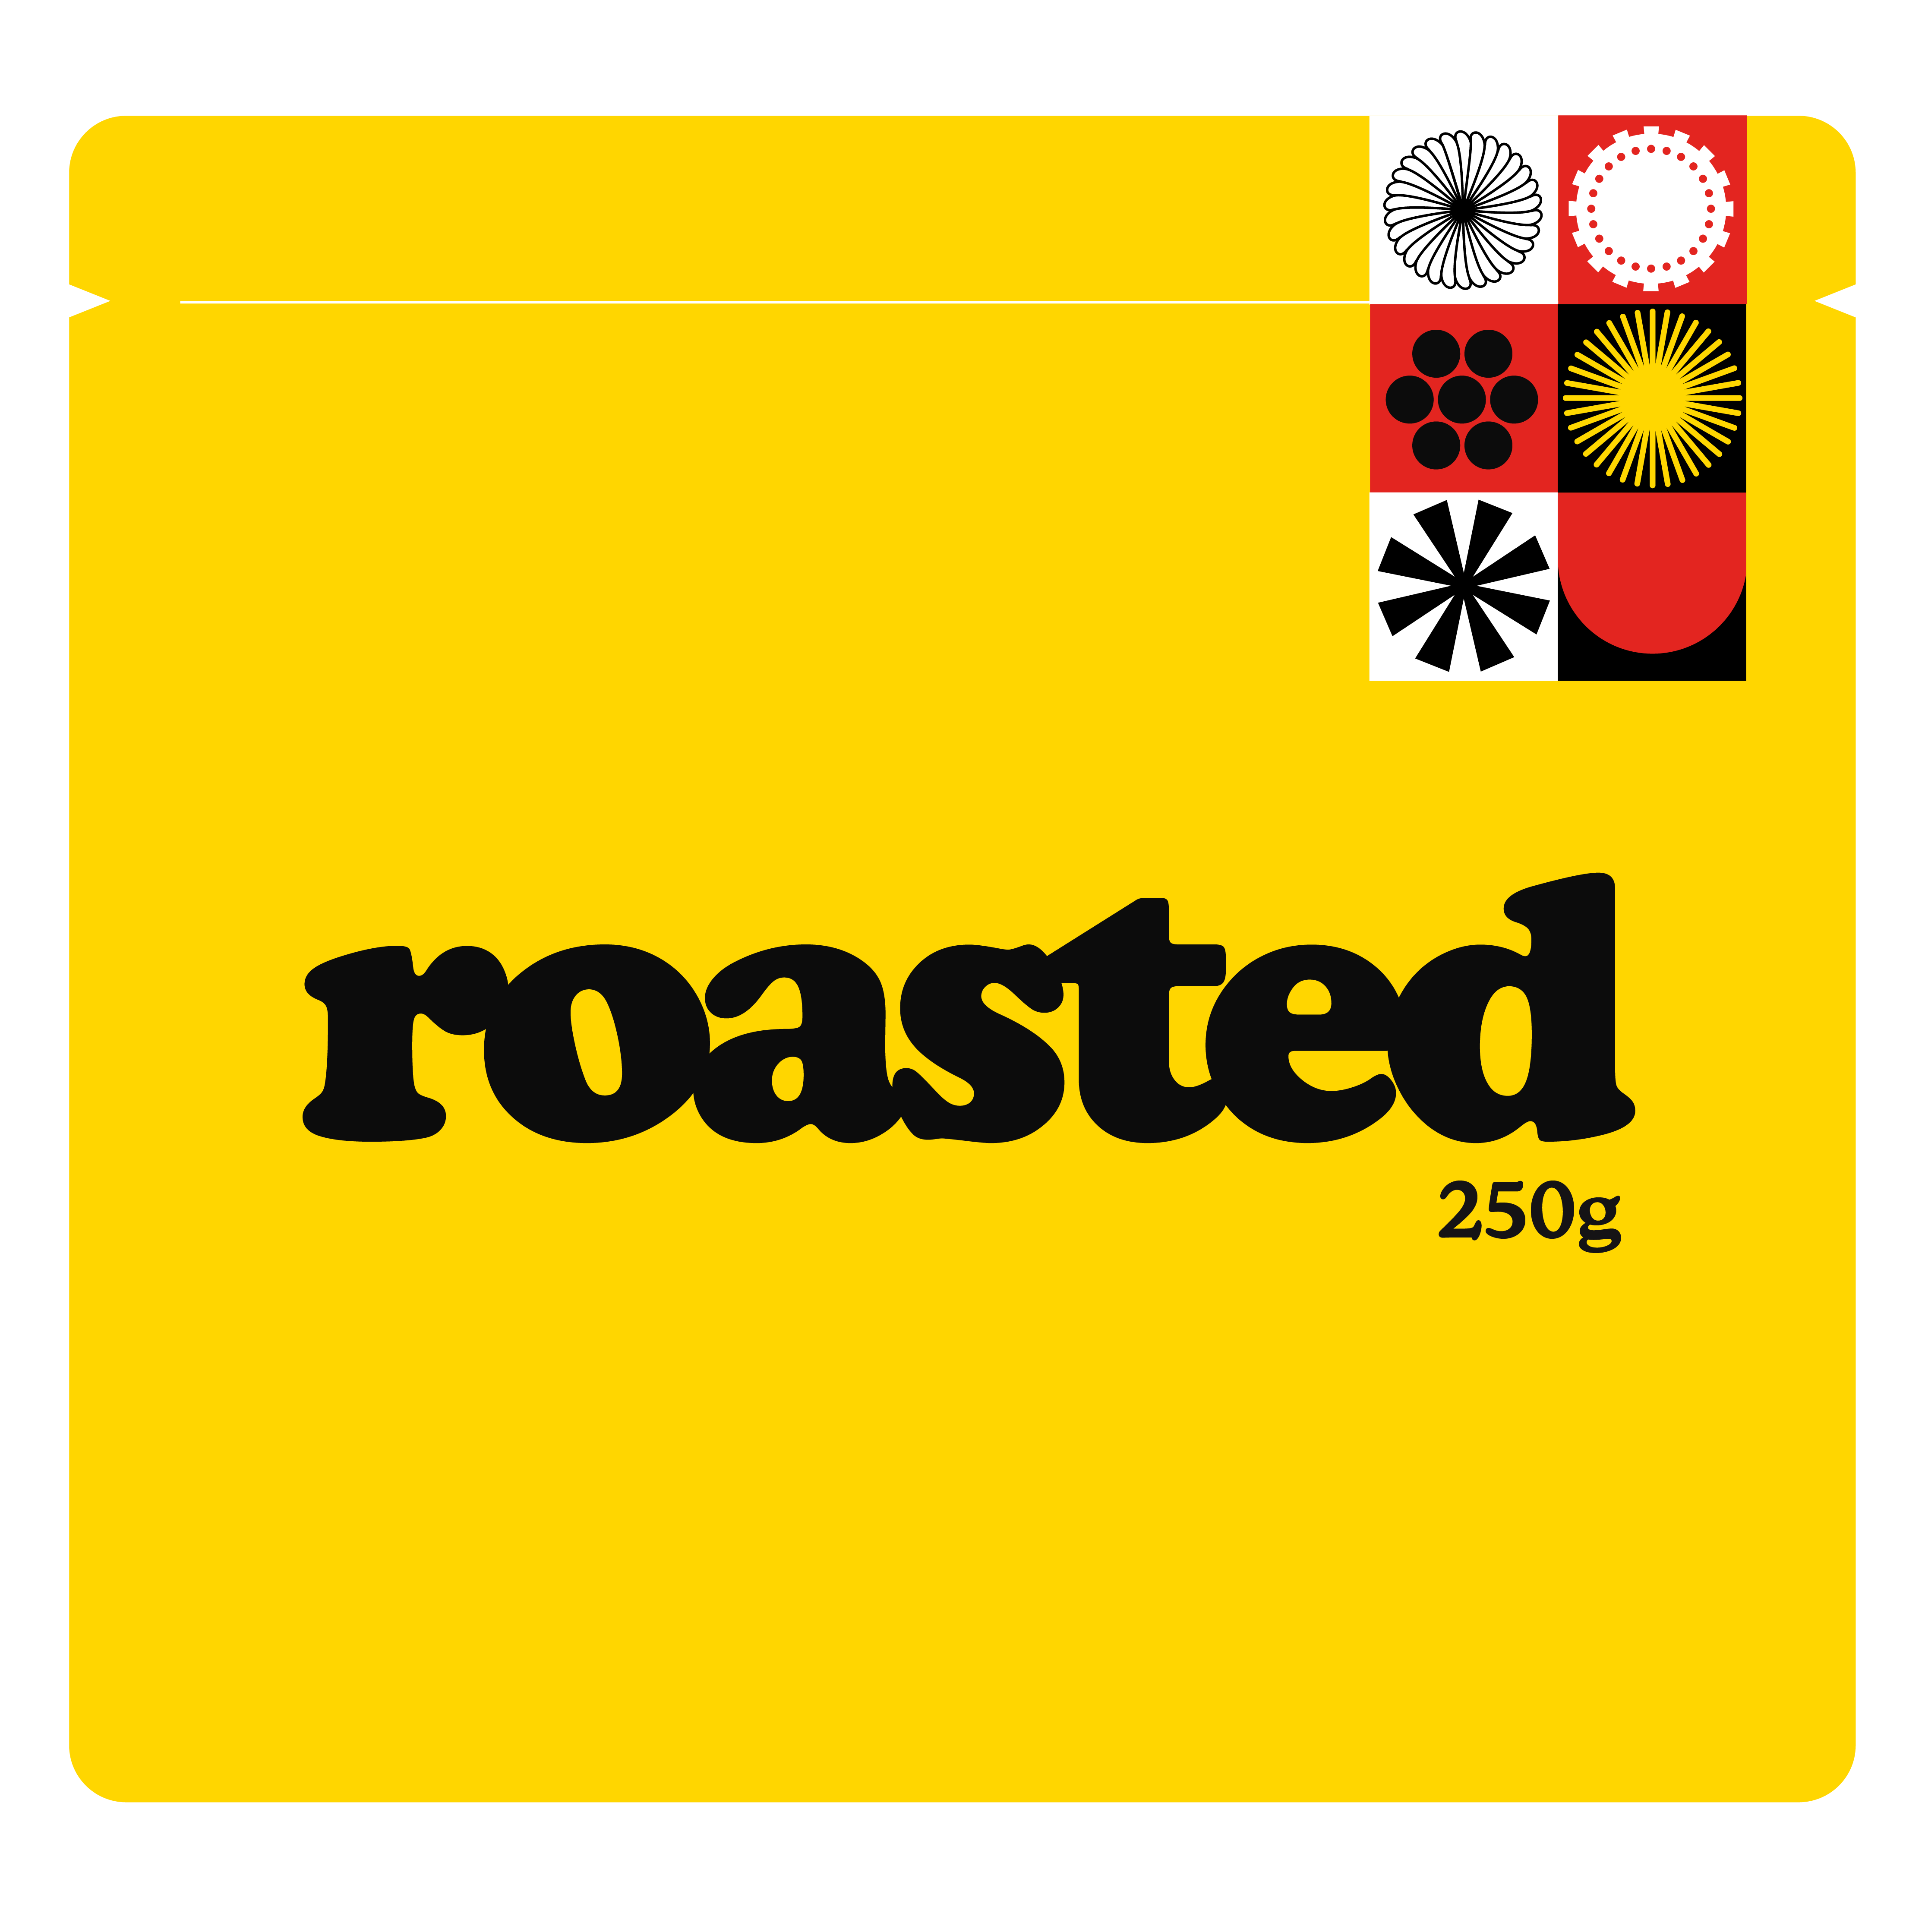 Roaster's Choice Filter Coffee